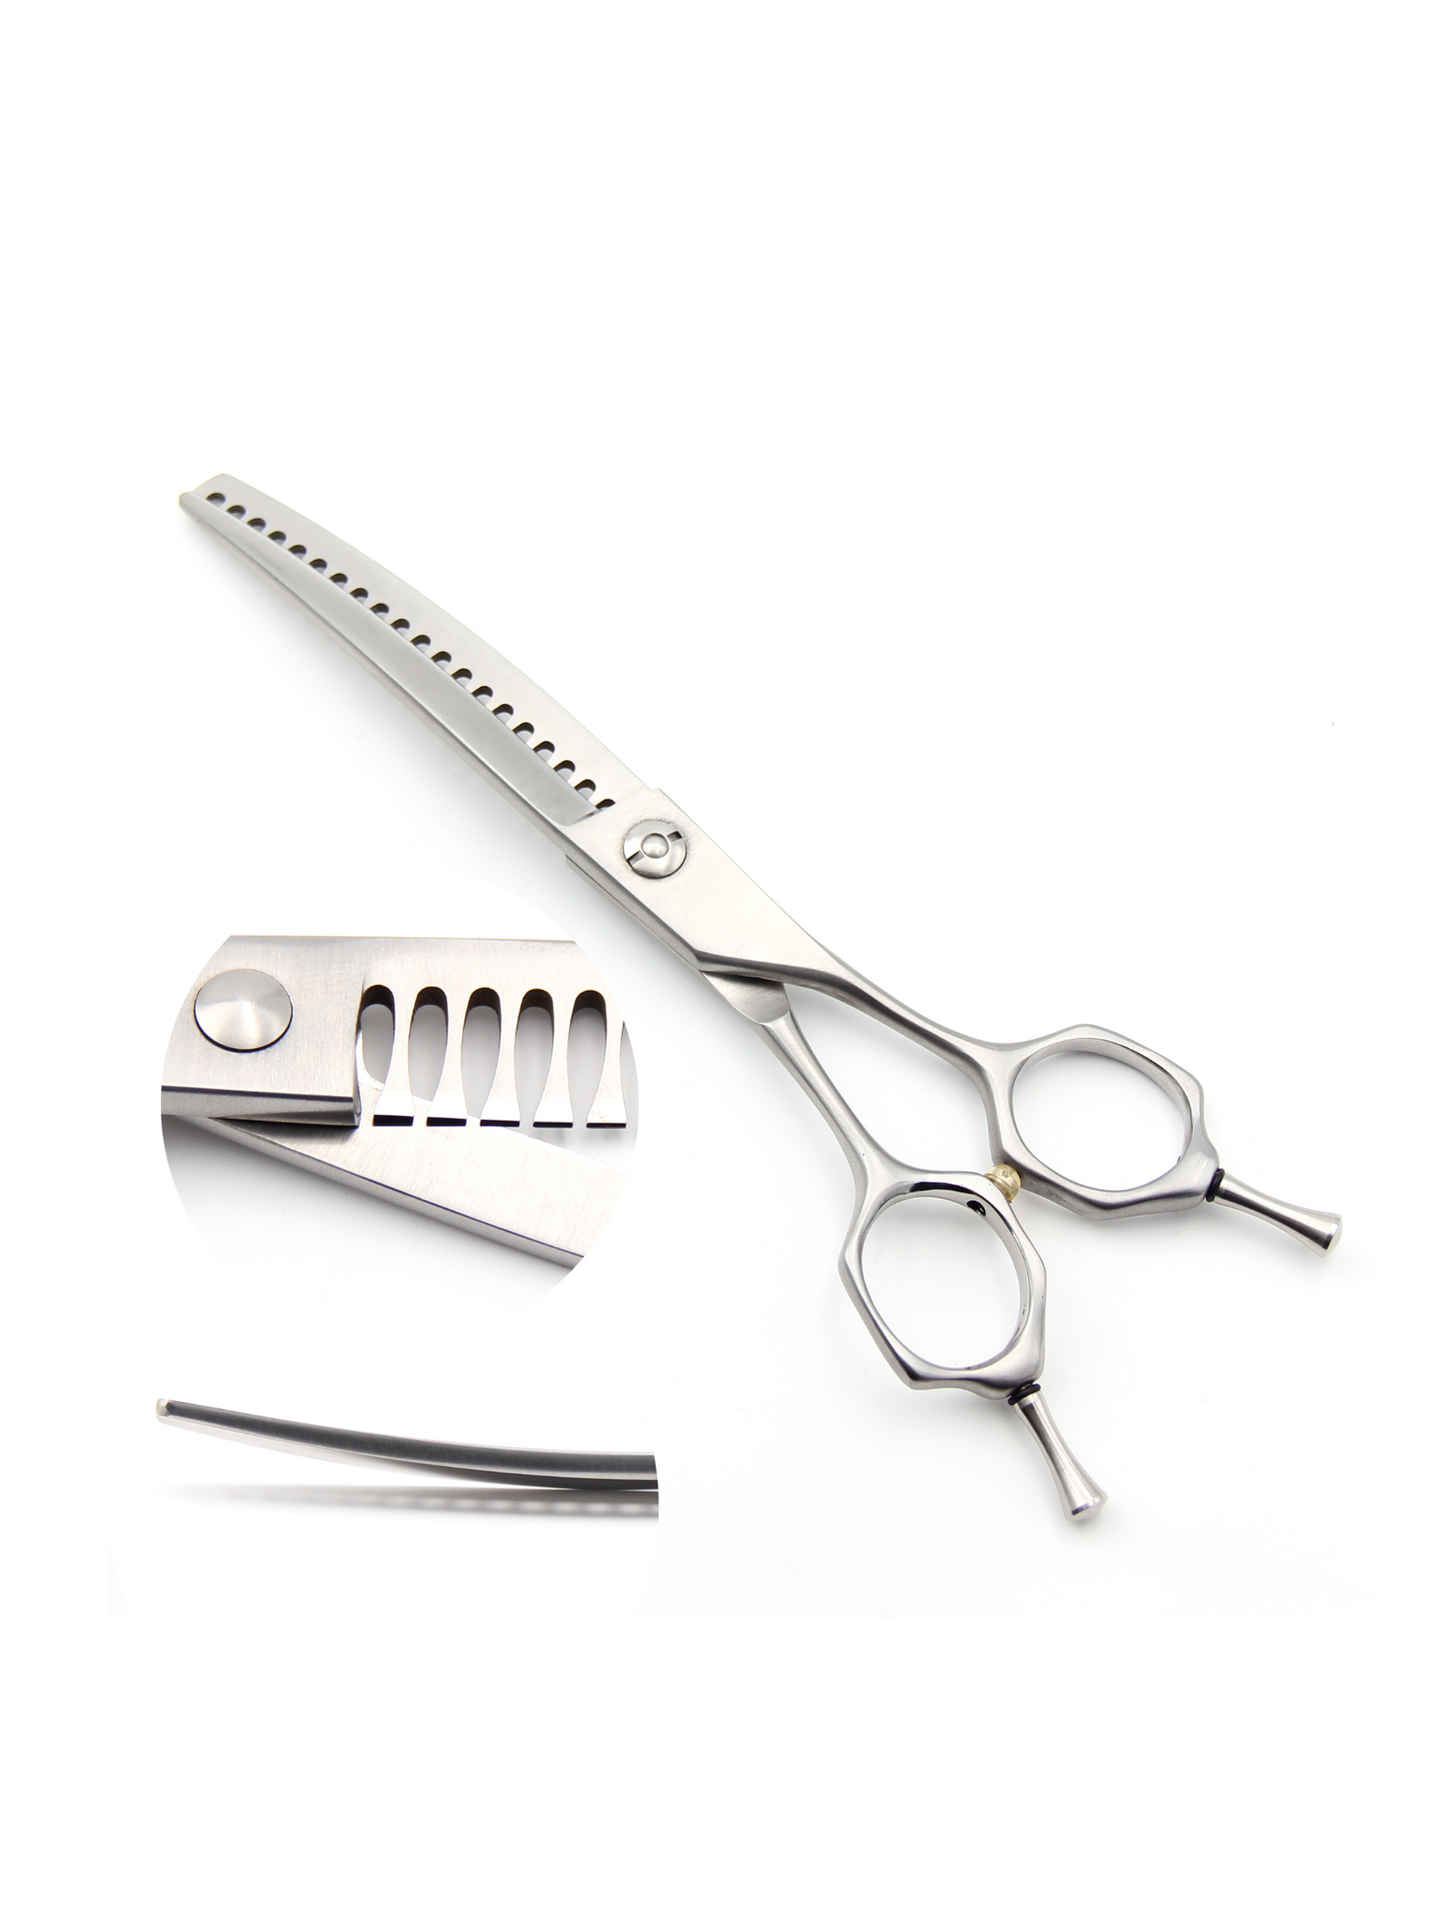 QRB-6536 professional curved shearing scissor 6.5" 36 teeth